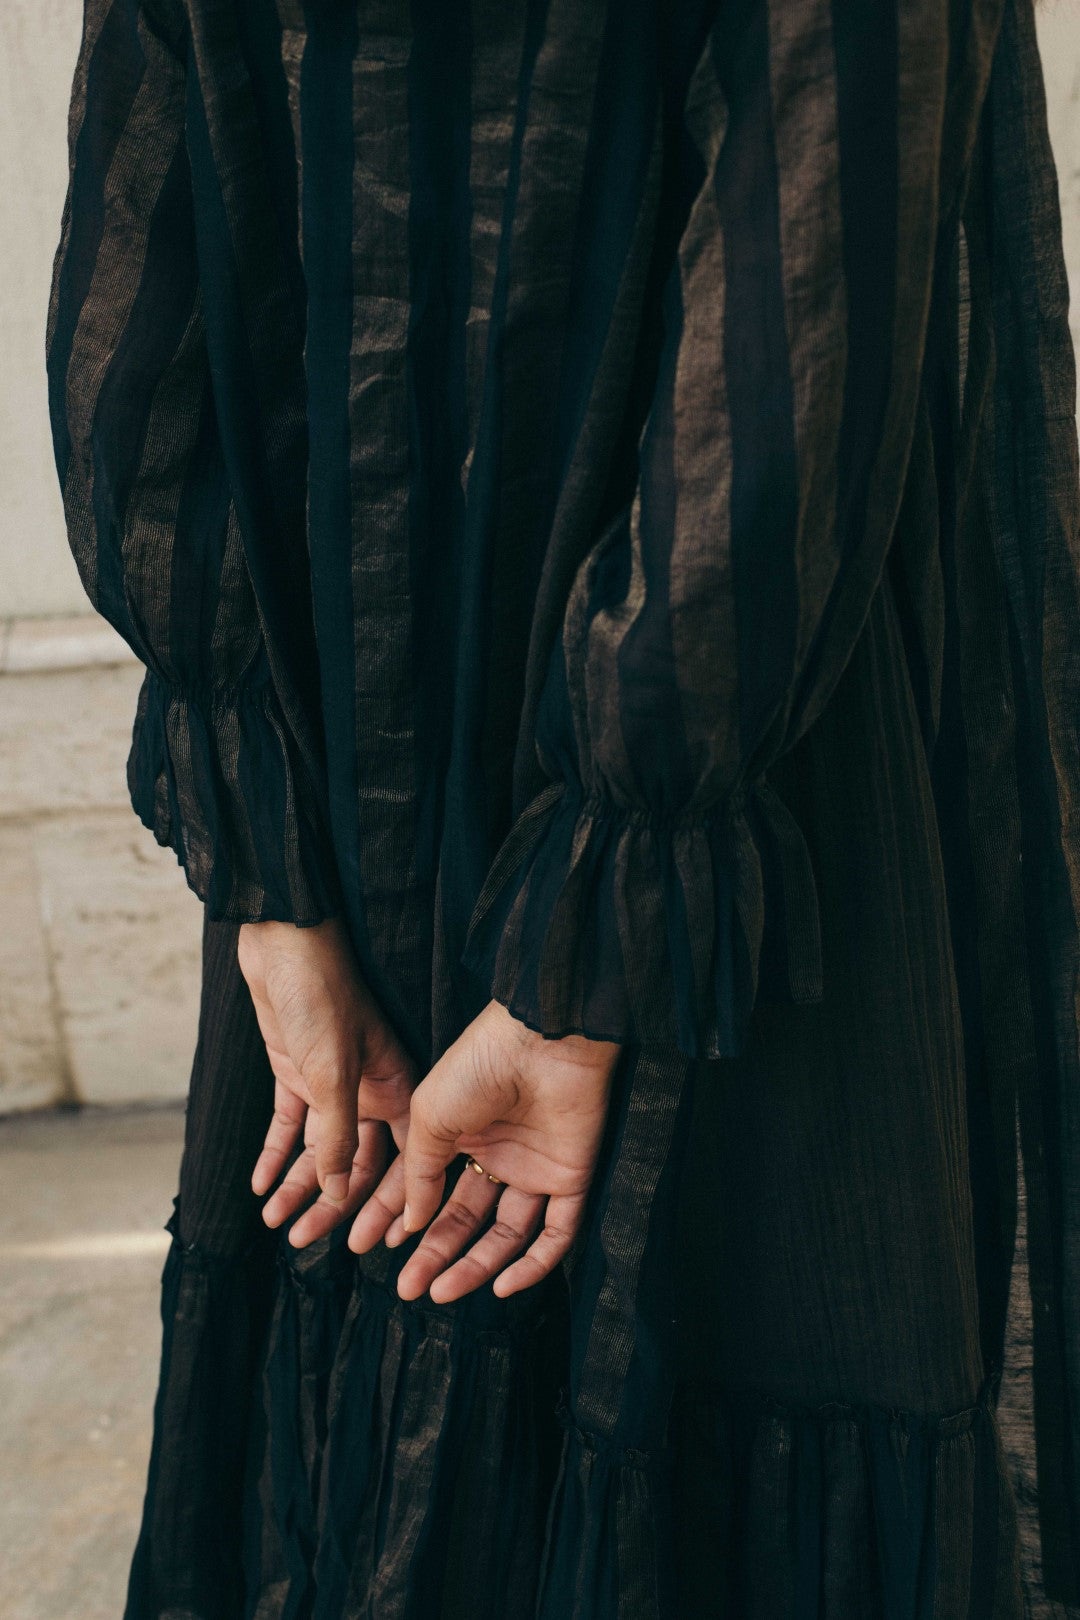 Zari stripe Chanderi High Low Gather Frill Dress with a color black zari cotton silk inner